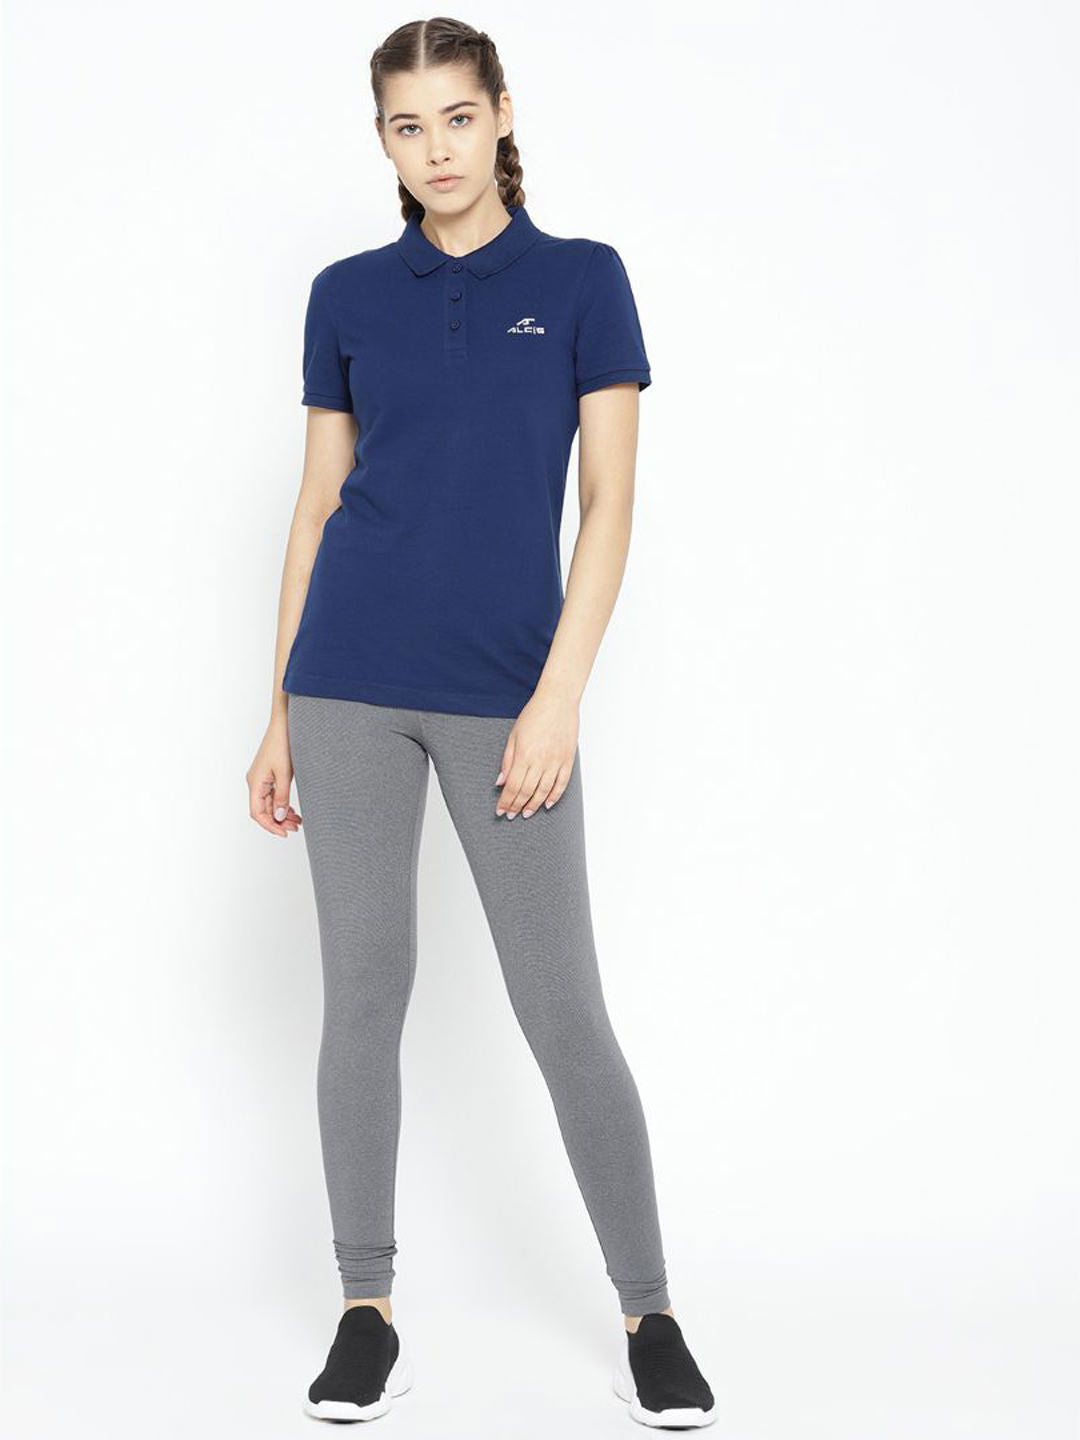 Alcis Women Navy Blue Solid Polo Collar T-shirt